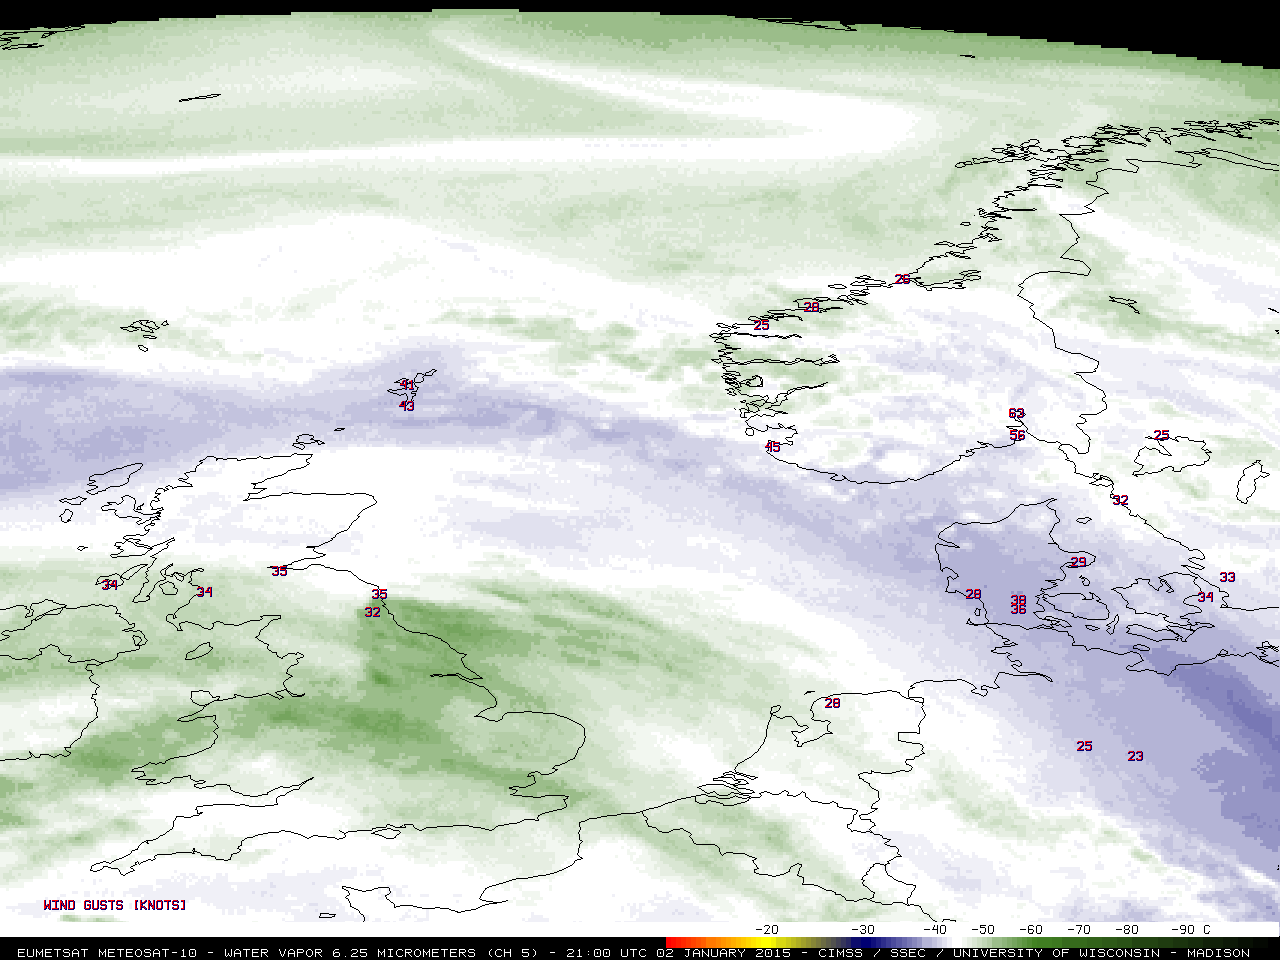 EUMETSAT Meteosat-10 6.25 µm water vapor channel images (click to play animation)